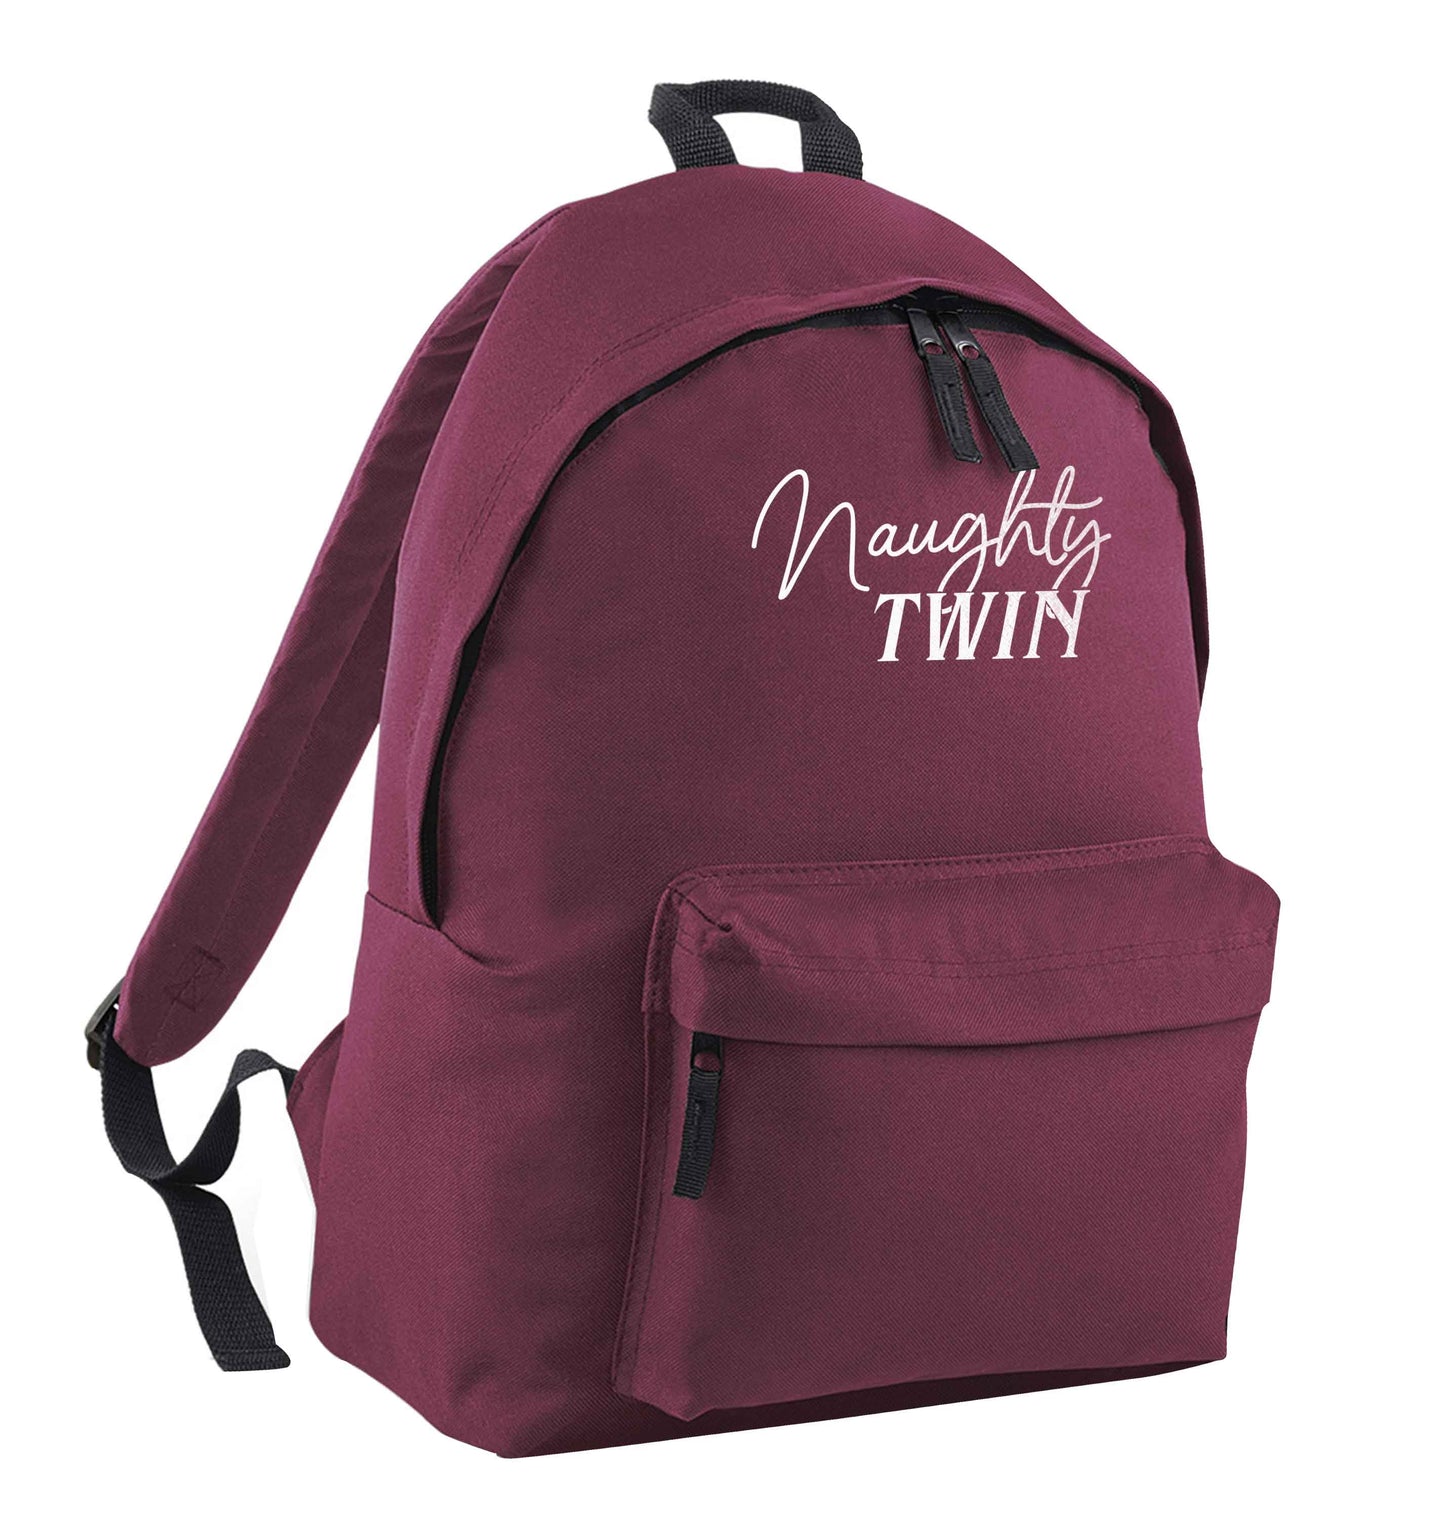 Naughty twin maroon adults backpack